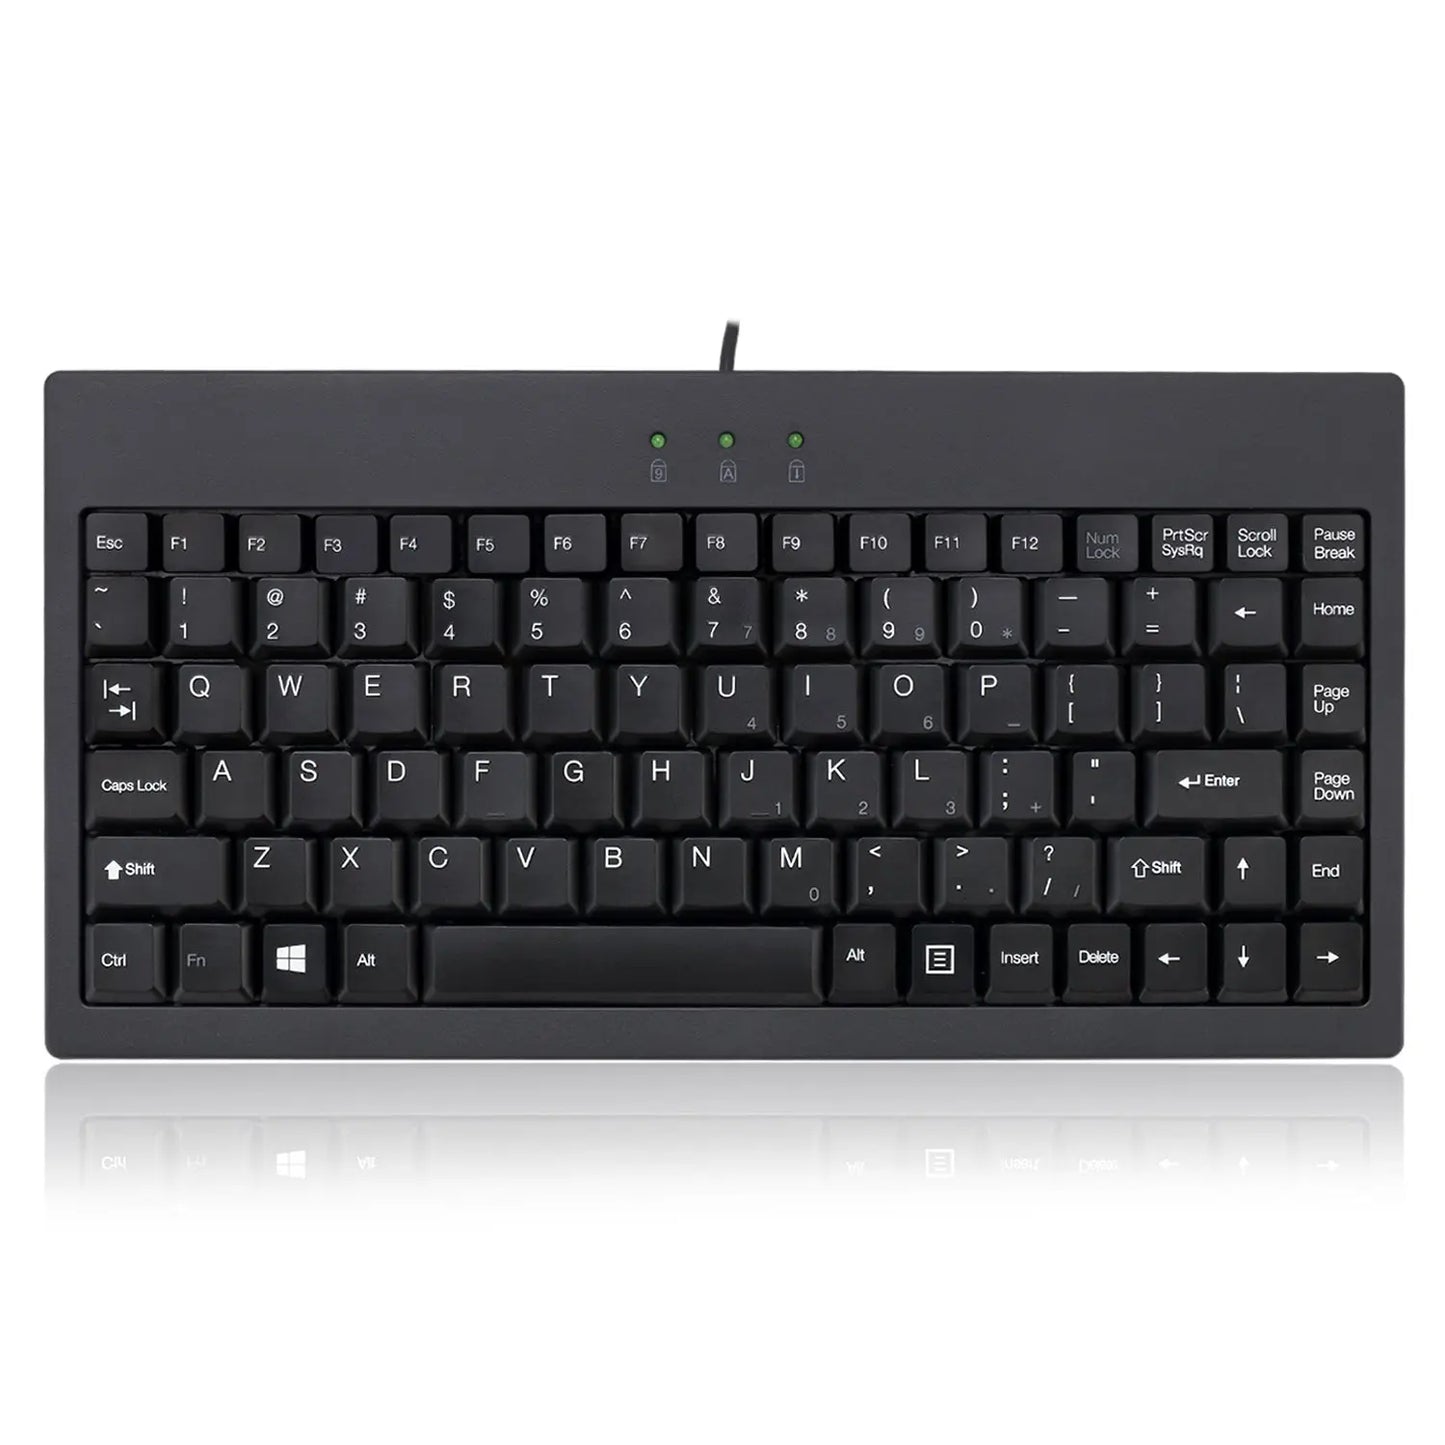 Adesso AKB-110B - Mini toetsenbord - Bedraad USB - Zwart